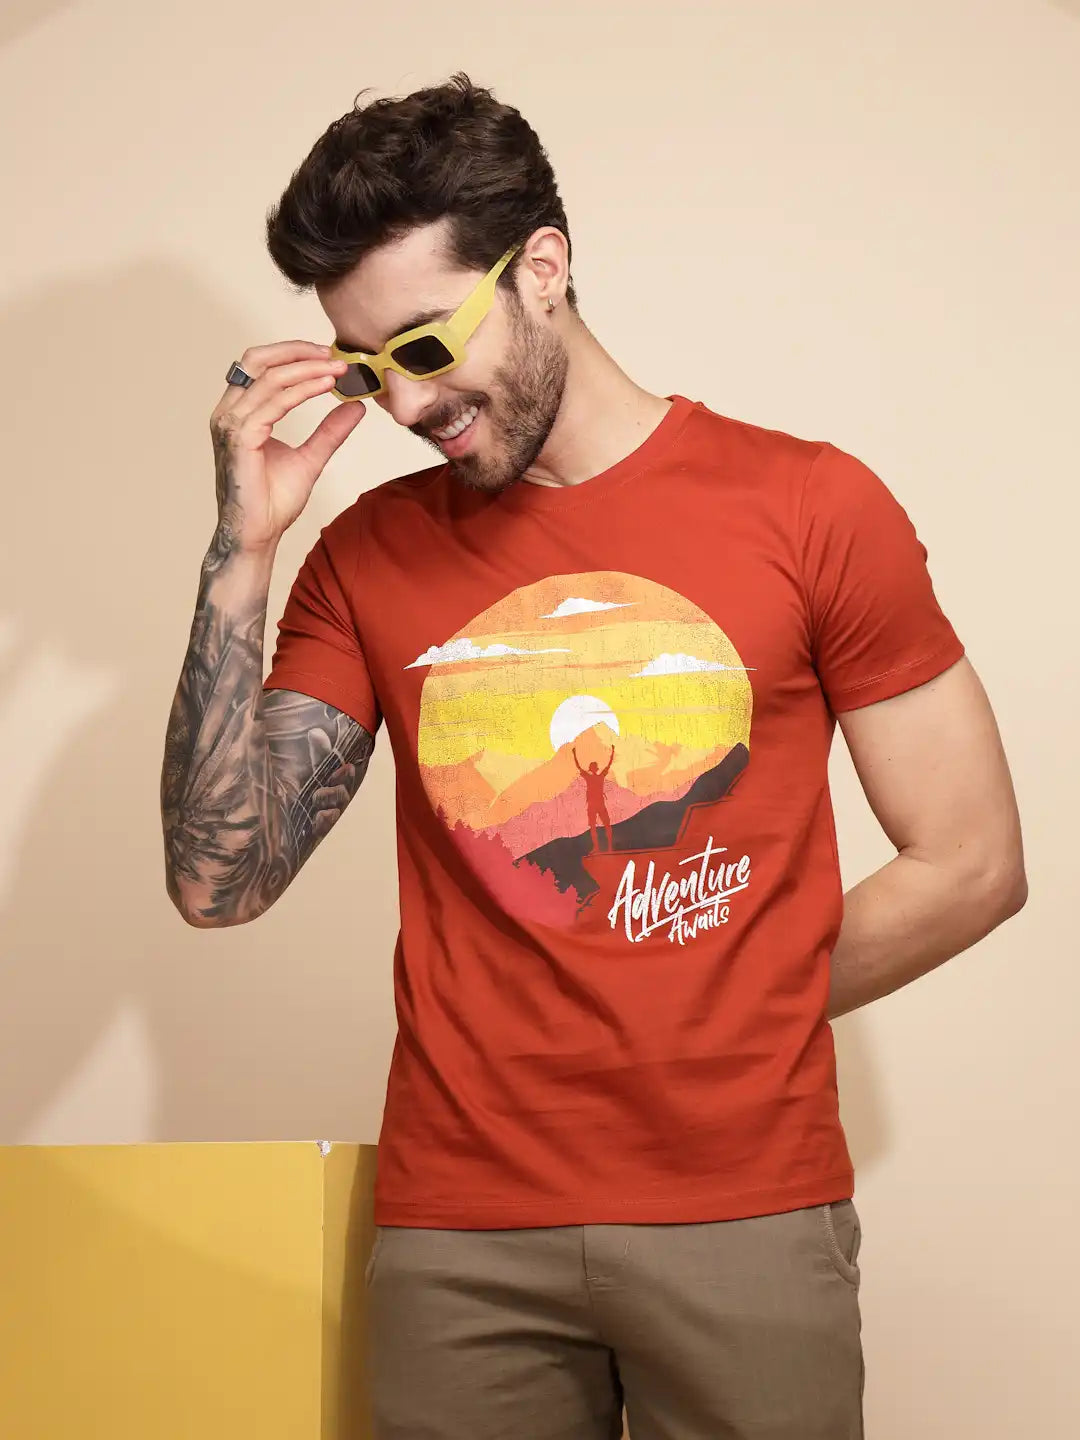 Orange Cotton Regular Fit T-Shirt For Men